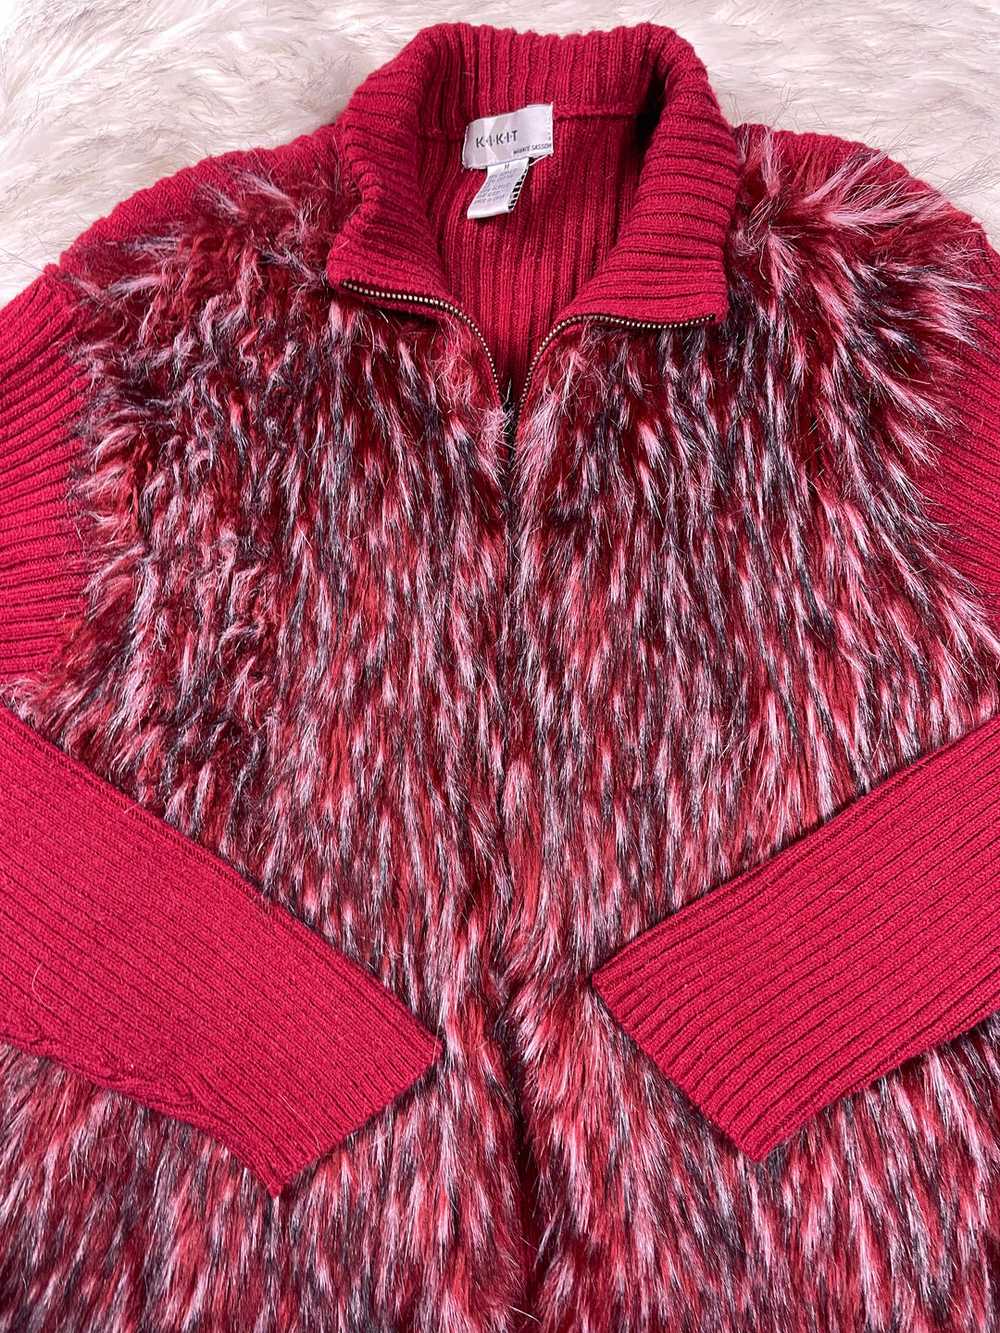 Y2k faux fur sweatshirt, Size M - image 4